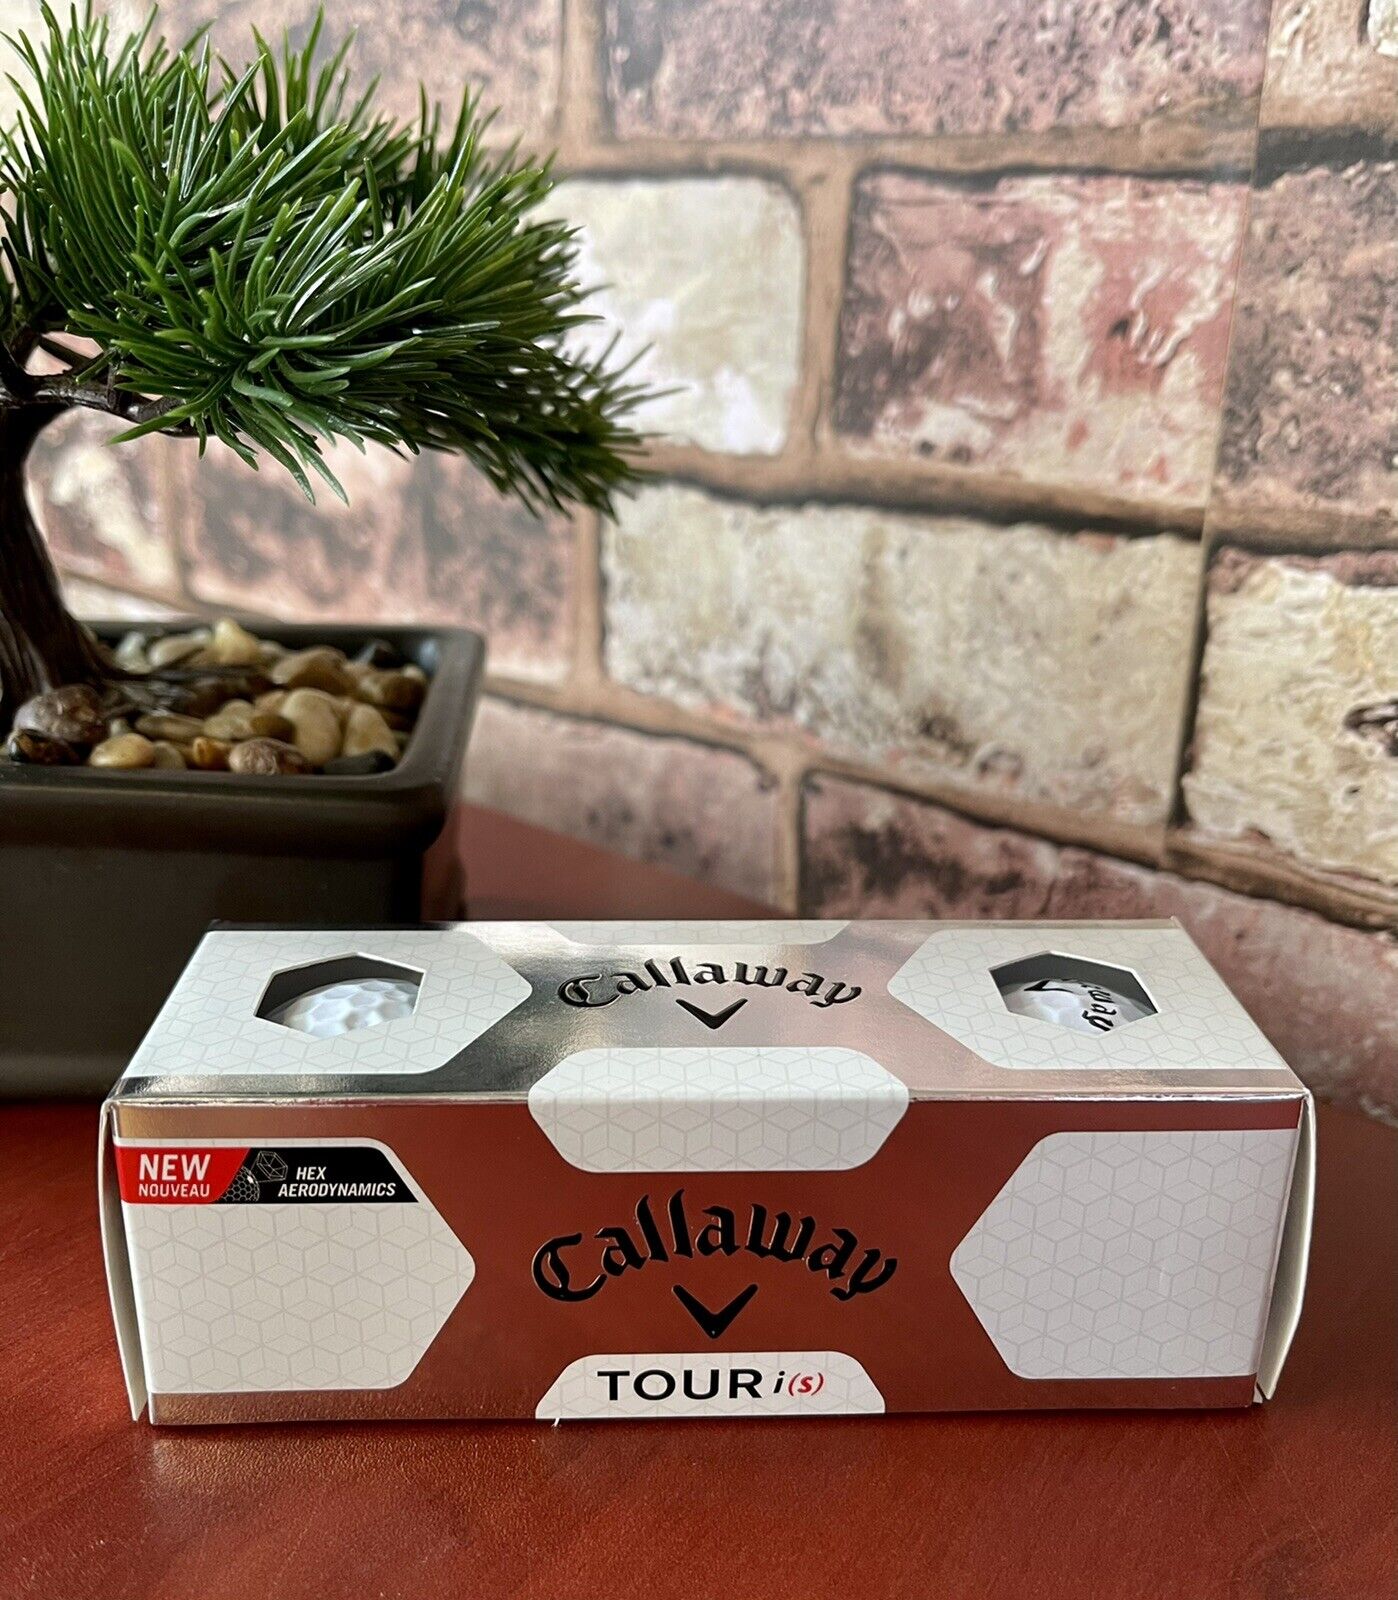 Callaway Tour i(s) Golf Balls, 1 Box, 3 balls In box NEW